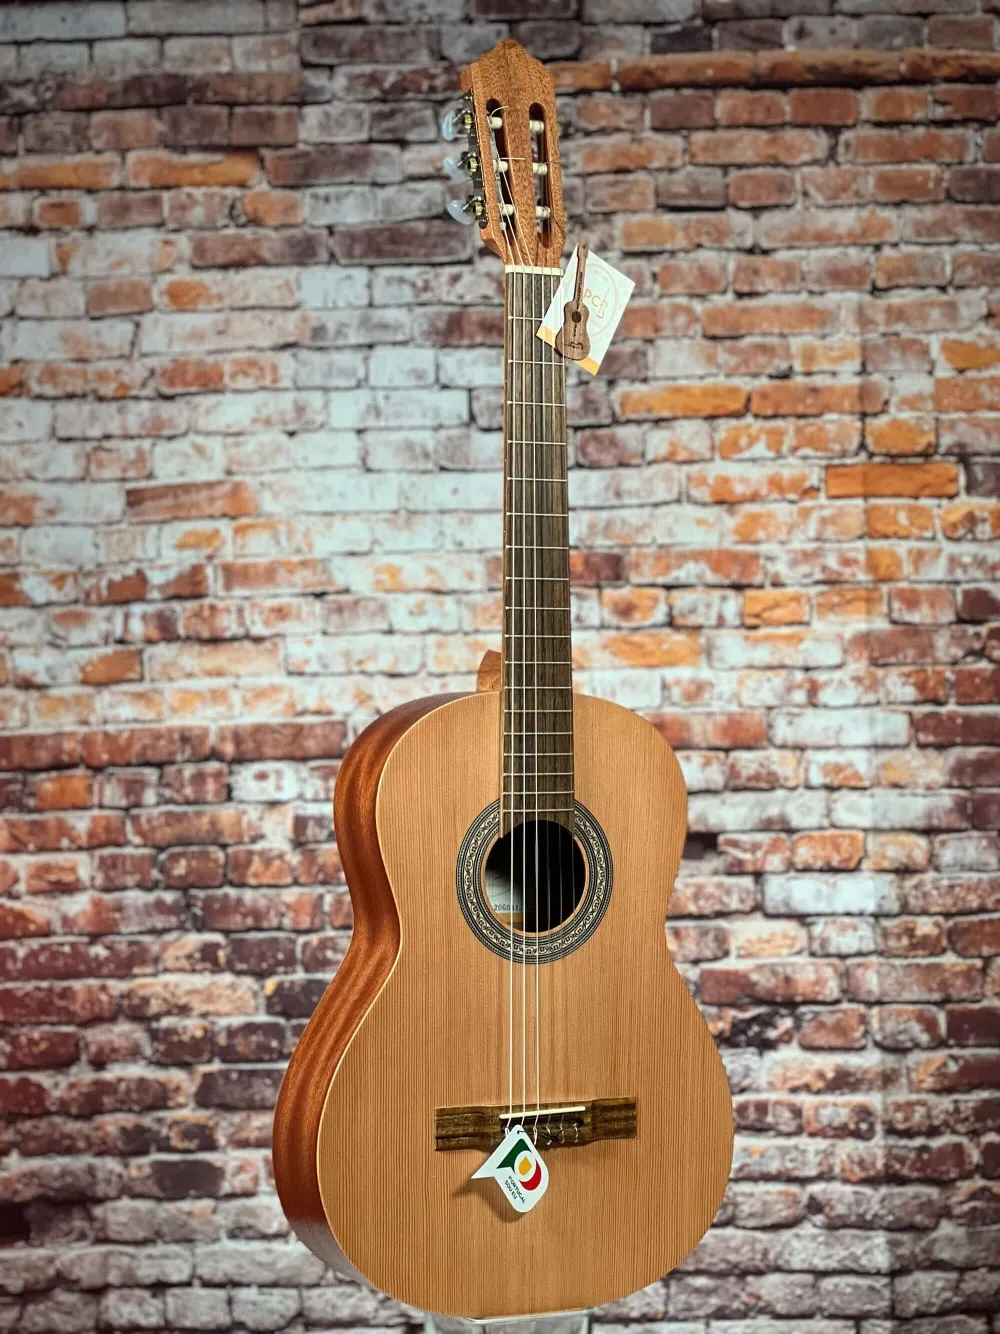 Front-Detailansicht einer APC Kontert (Classic) Gitarre Modell GC200 OP 7/8